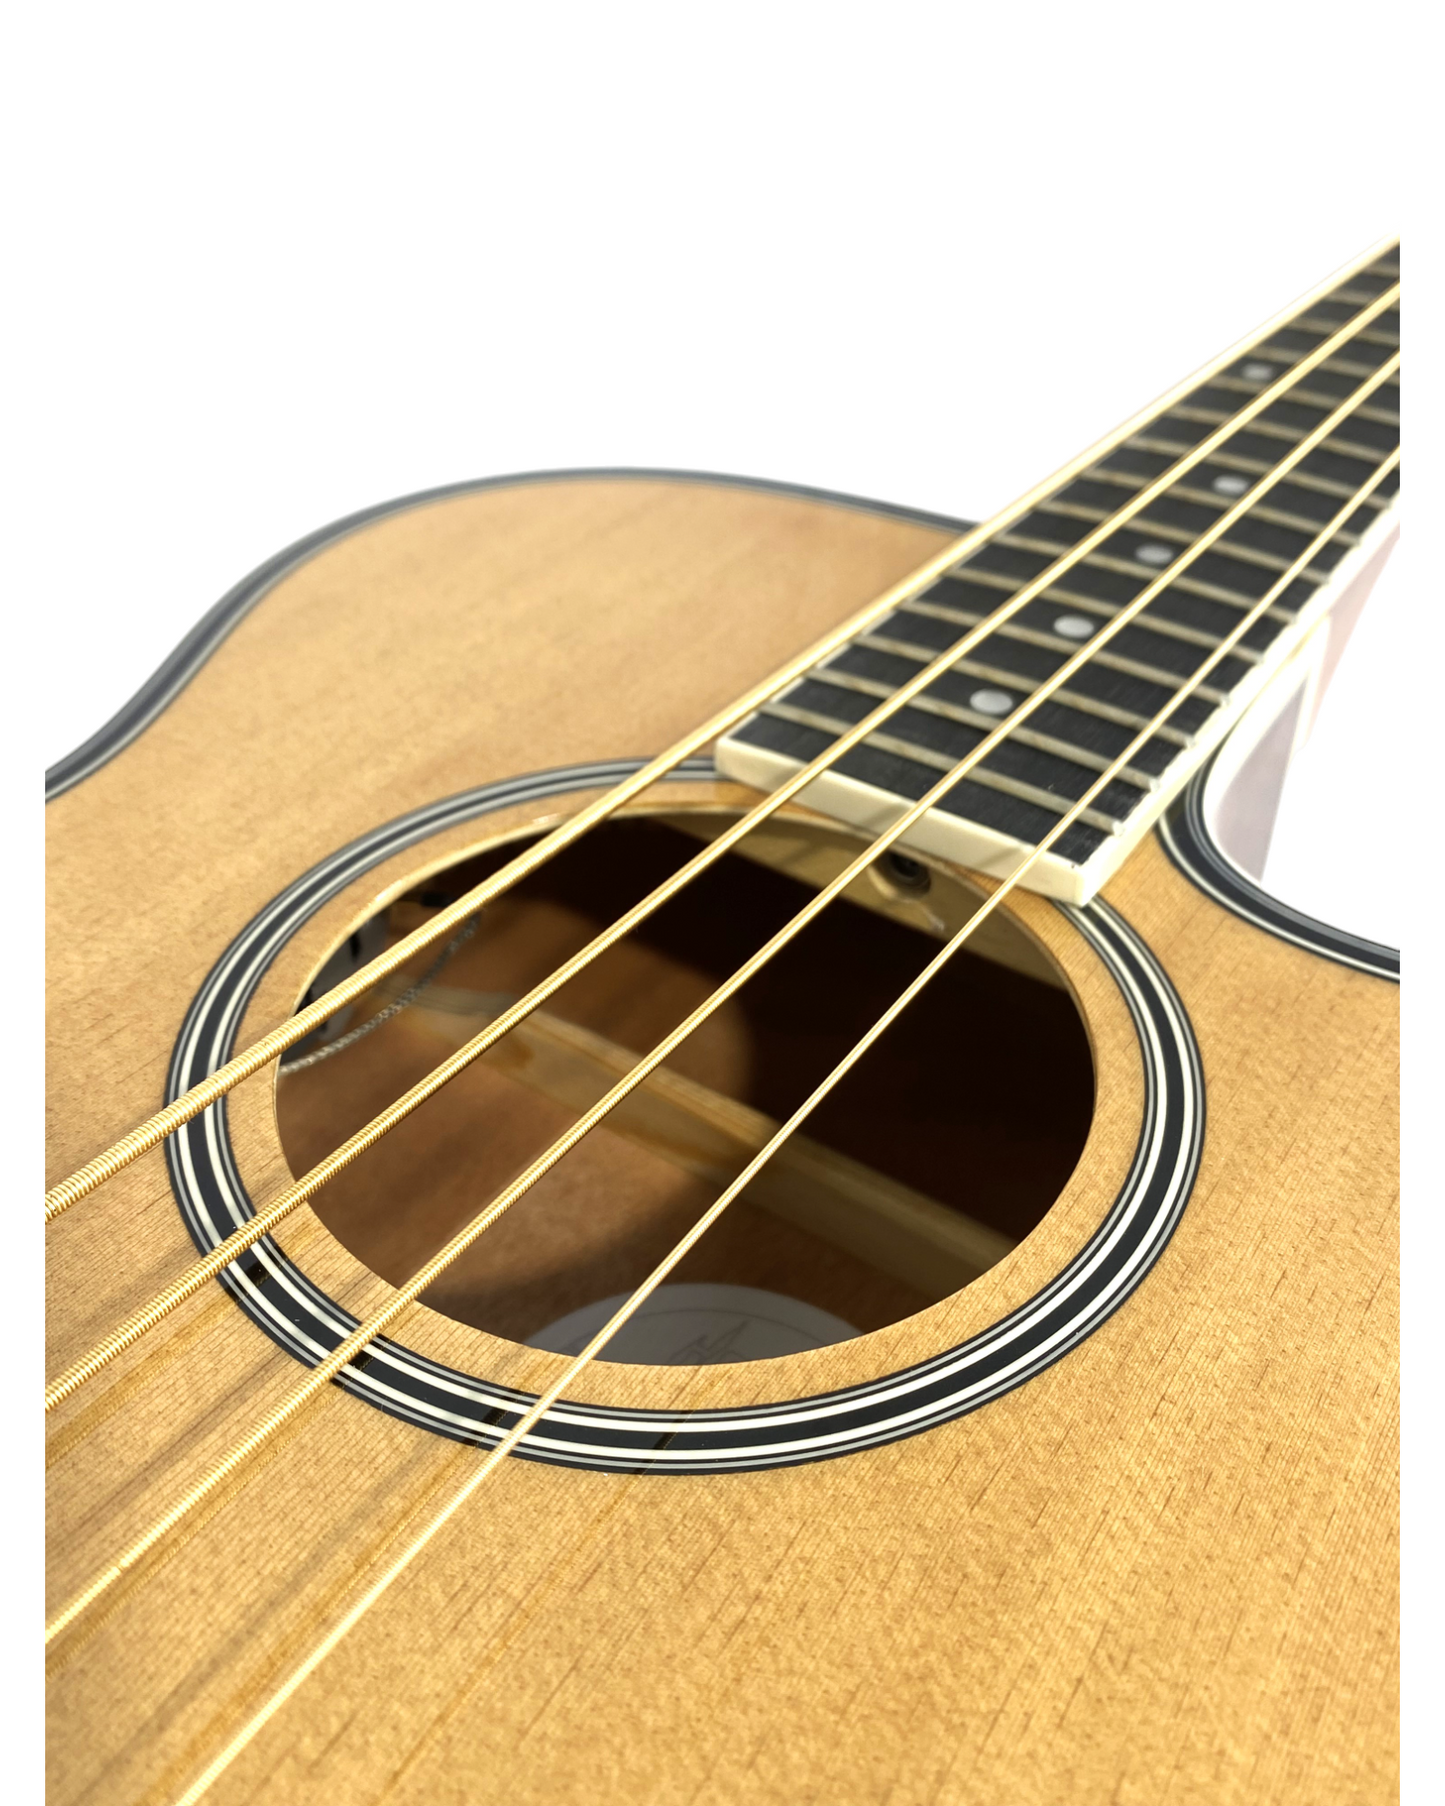 Haze FB711BCEQN34 3/4 4-String Electric-Acoustic Bass Guitar Natural + Free Gig Bag